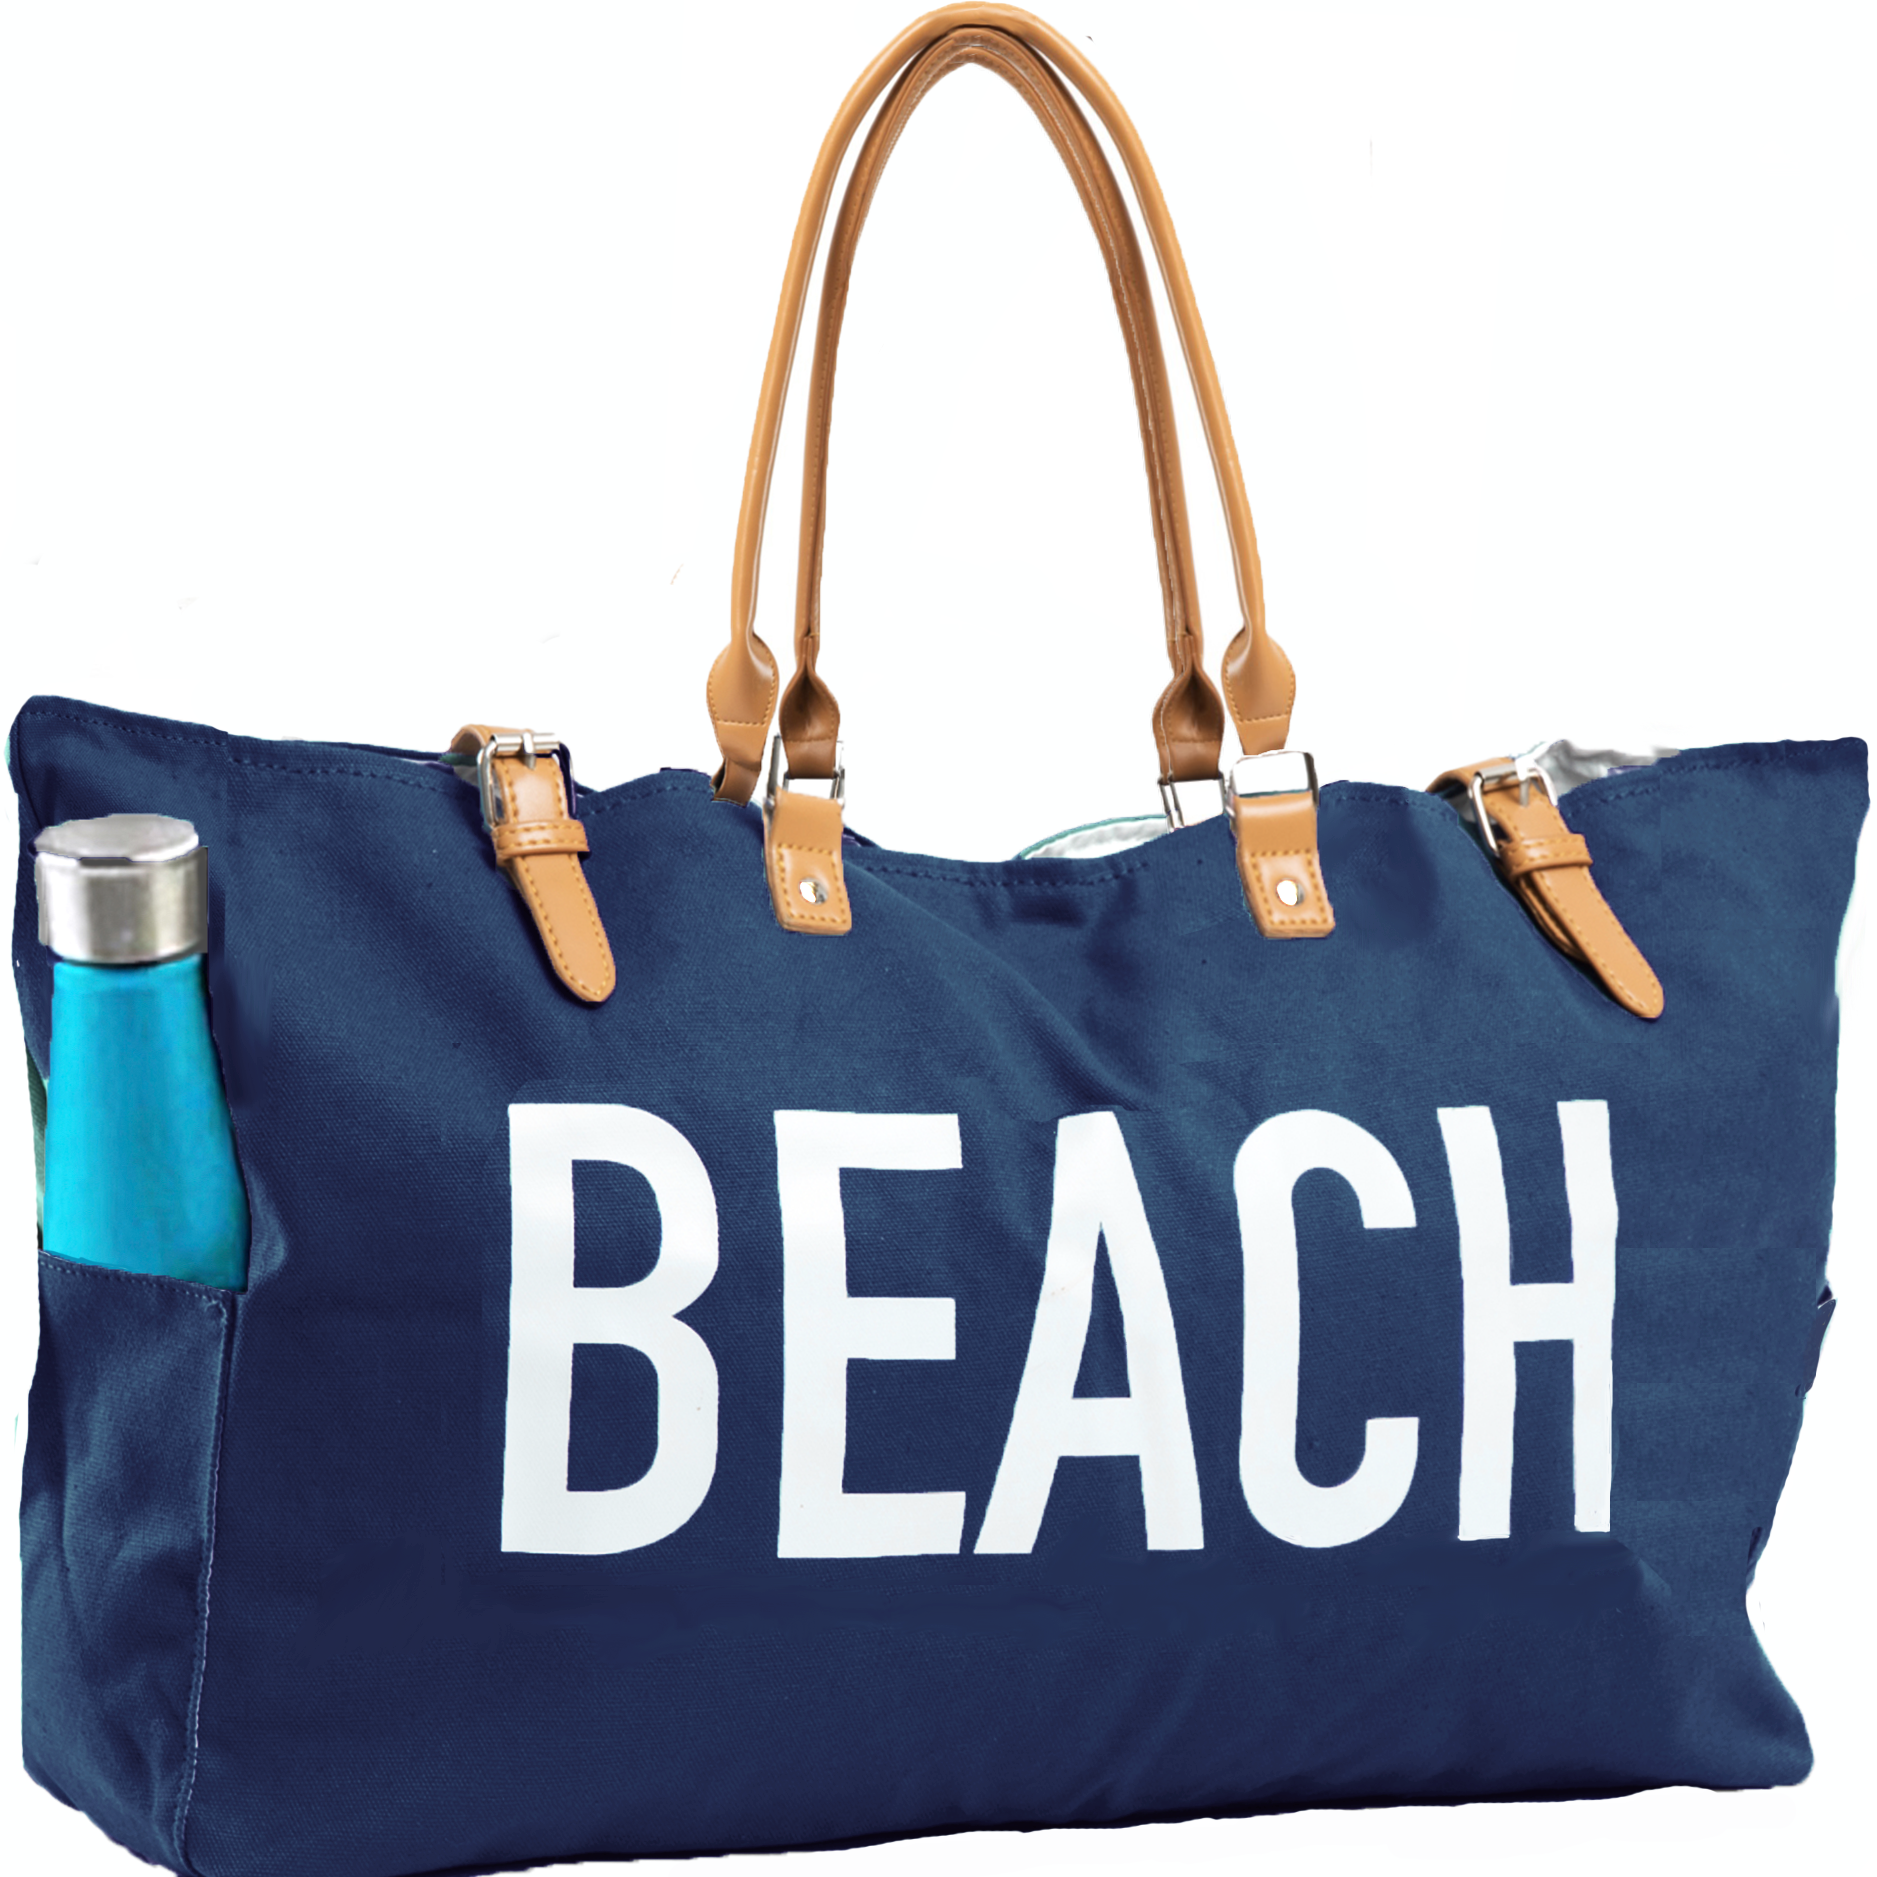 RIRO Beach Bag,Large Neoprene Beach Bag,Waterproof Shoulder Beach